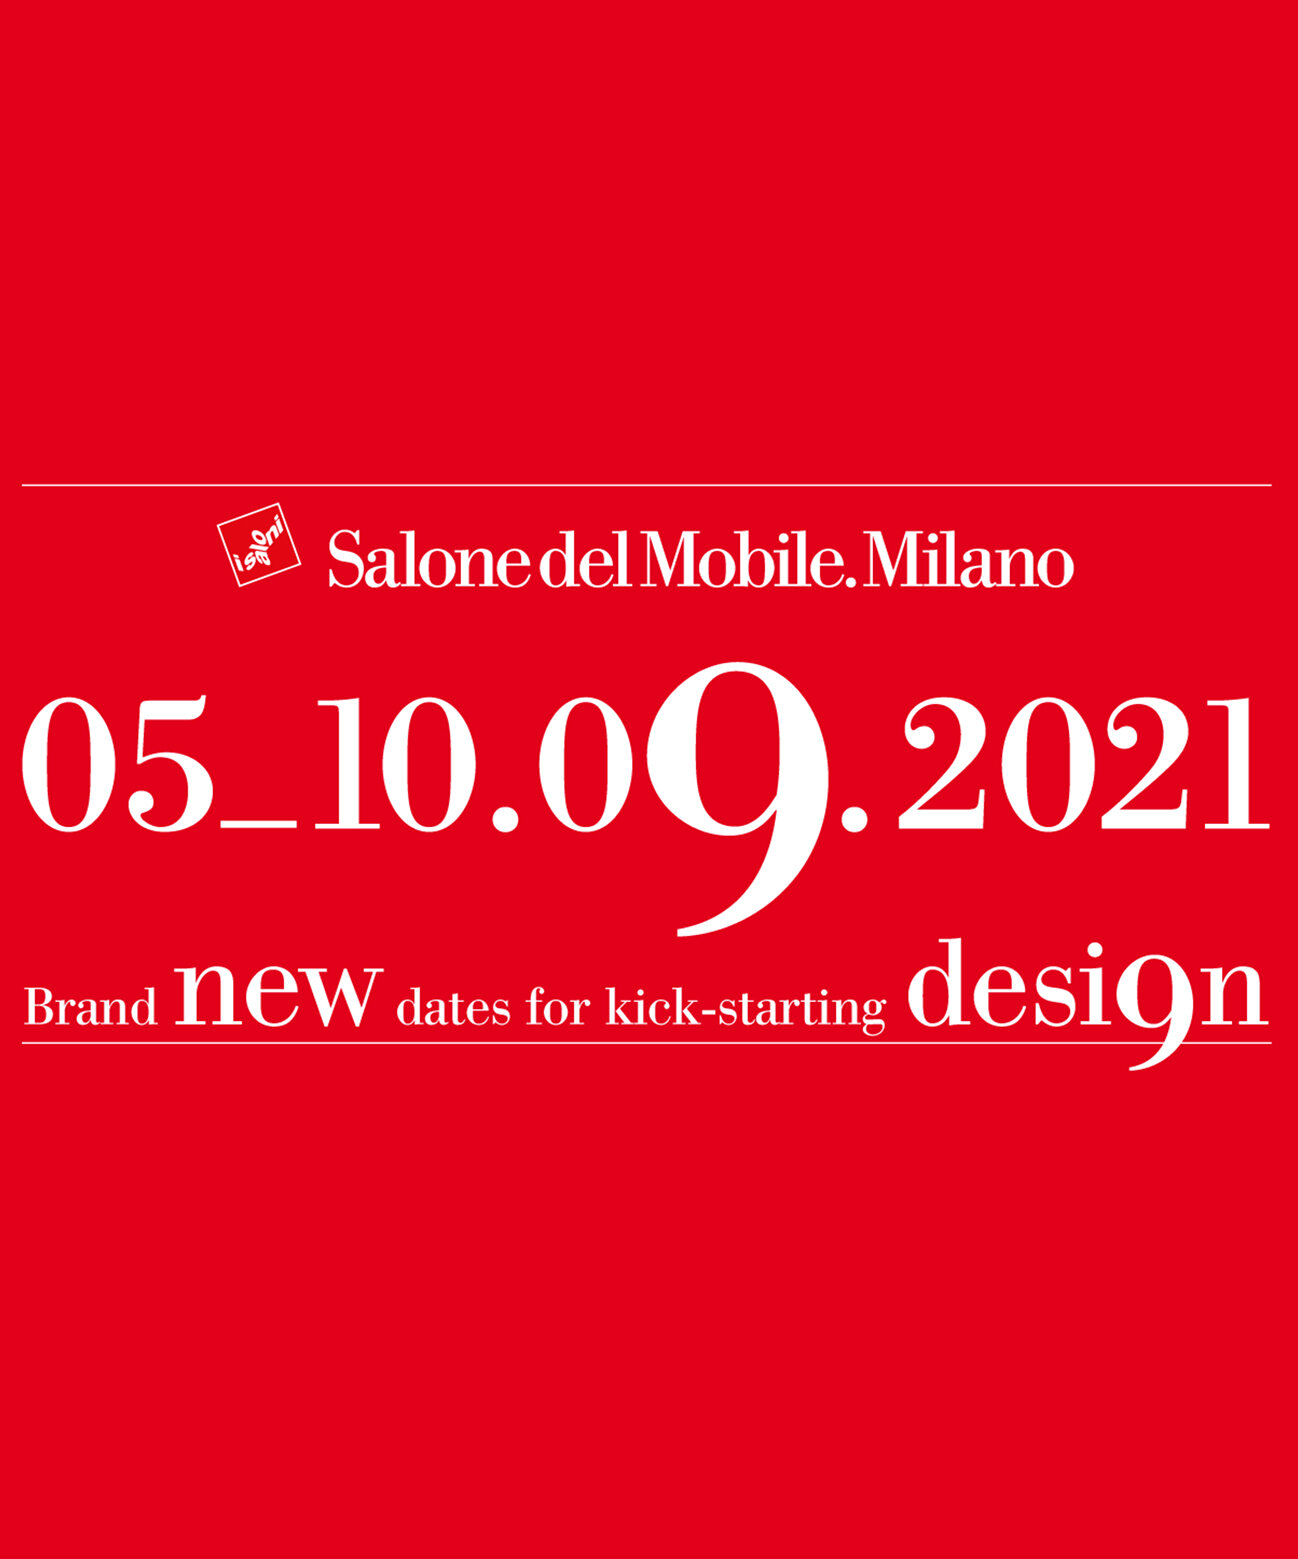 BREAKING NEWS: salone del mobile 2021 postponed until september